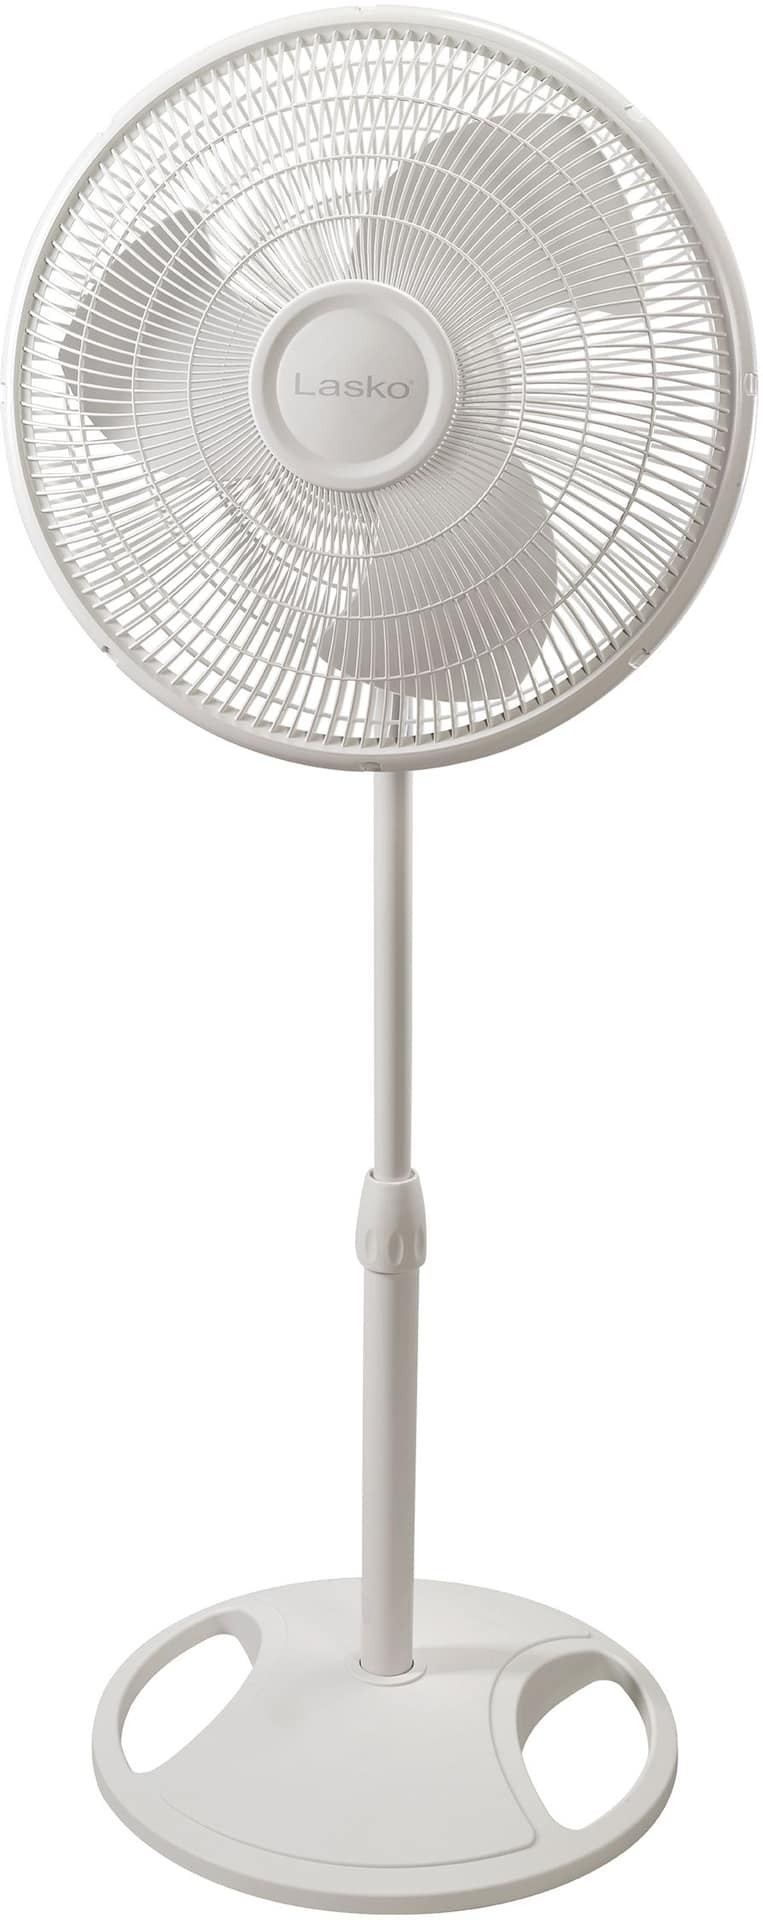 Lasko Tilt-Head Oscillating Pedestal/Stand Fan, 3-Speed, White, 16-in